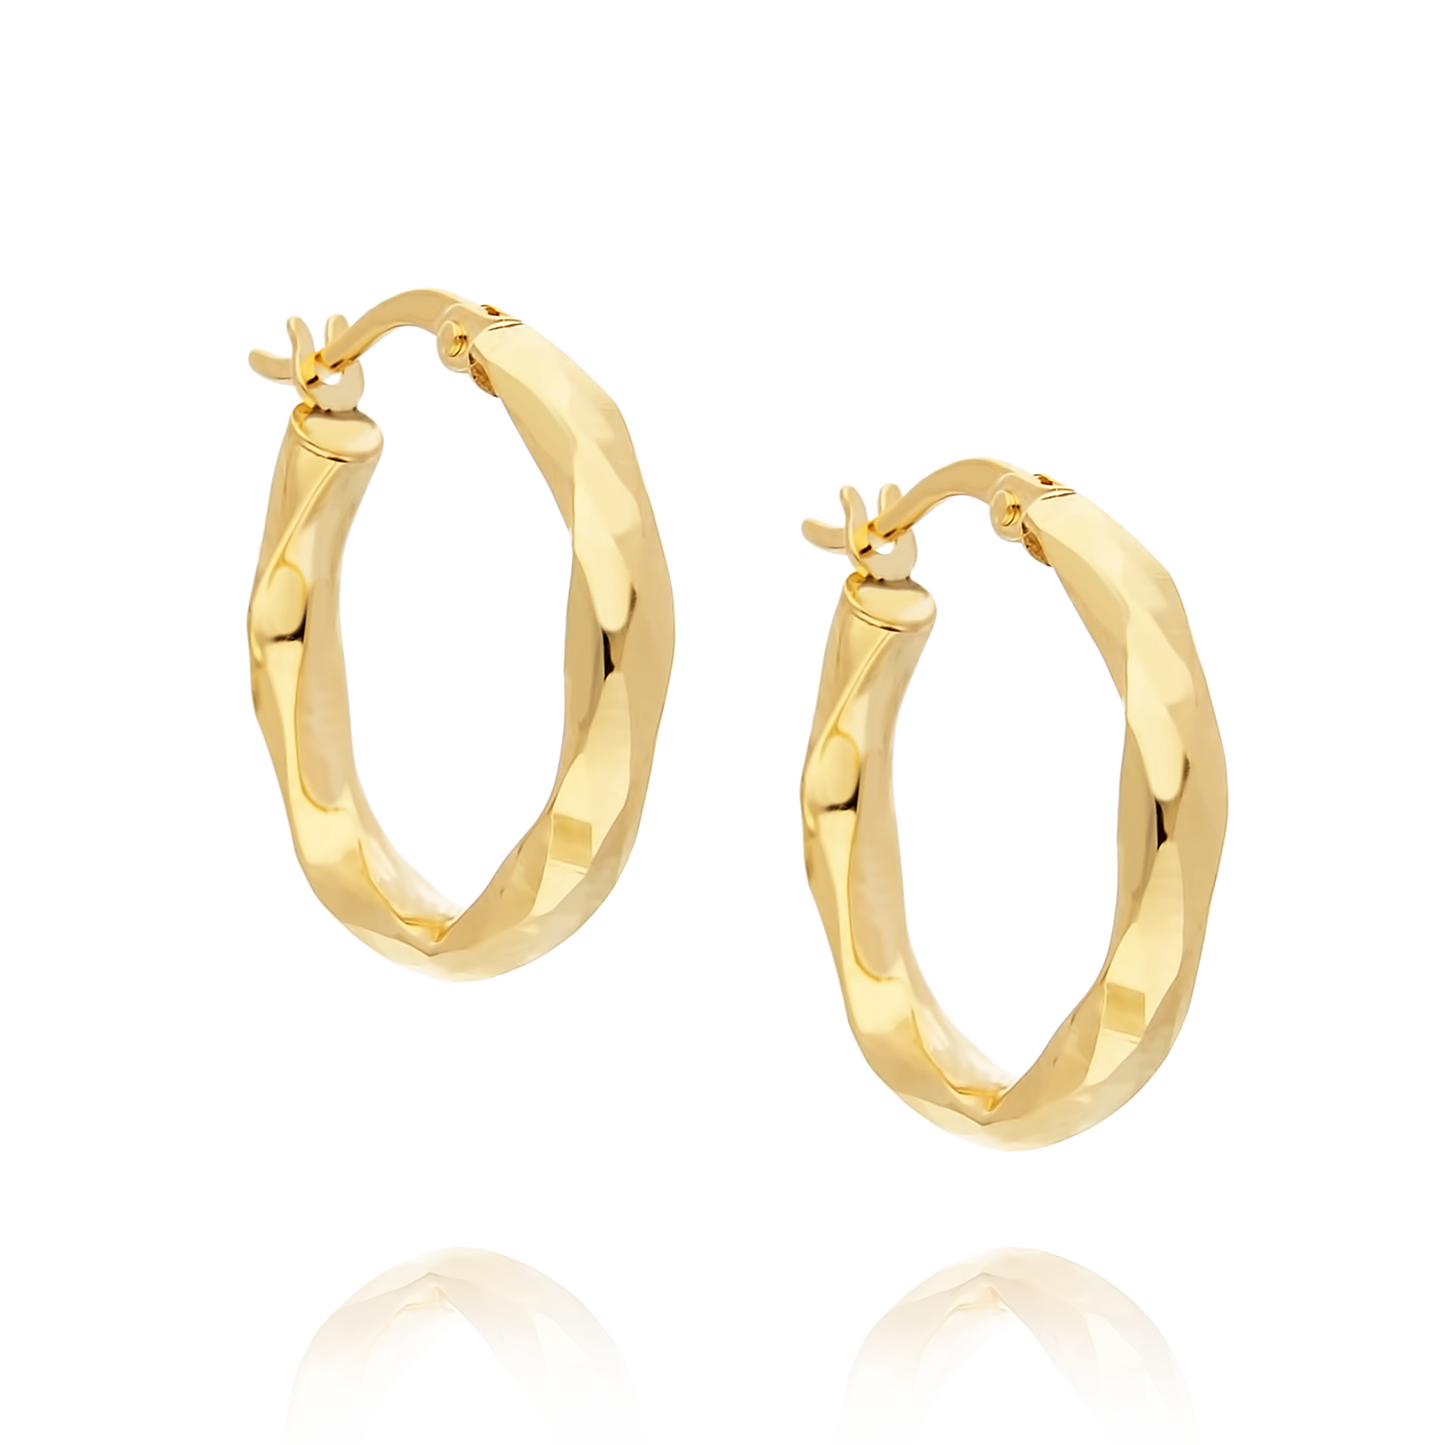 9ct Gold Hoop Earrings Diamond Cut Finish